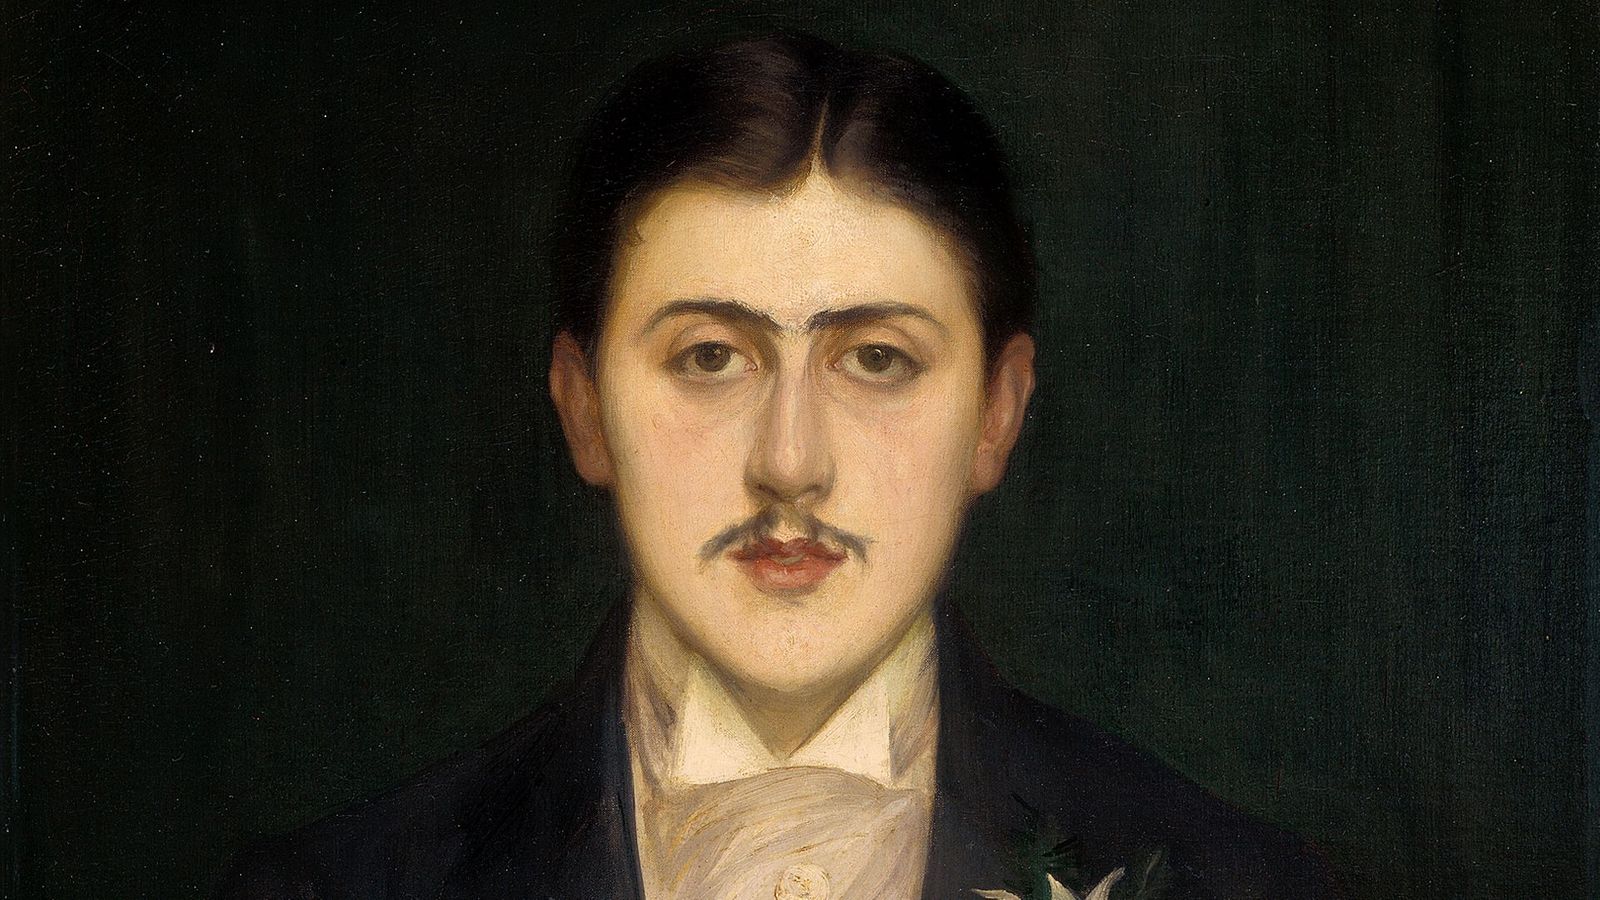 Marcel Proust hero (Credit: RMN-Grand Palais (Musée d'Orsay) / Hervé Lewandowski)